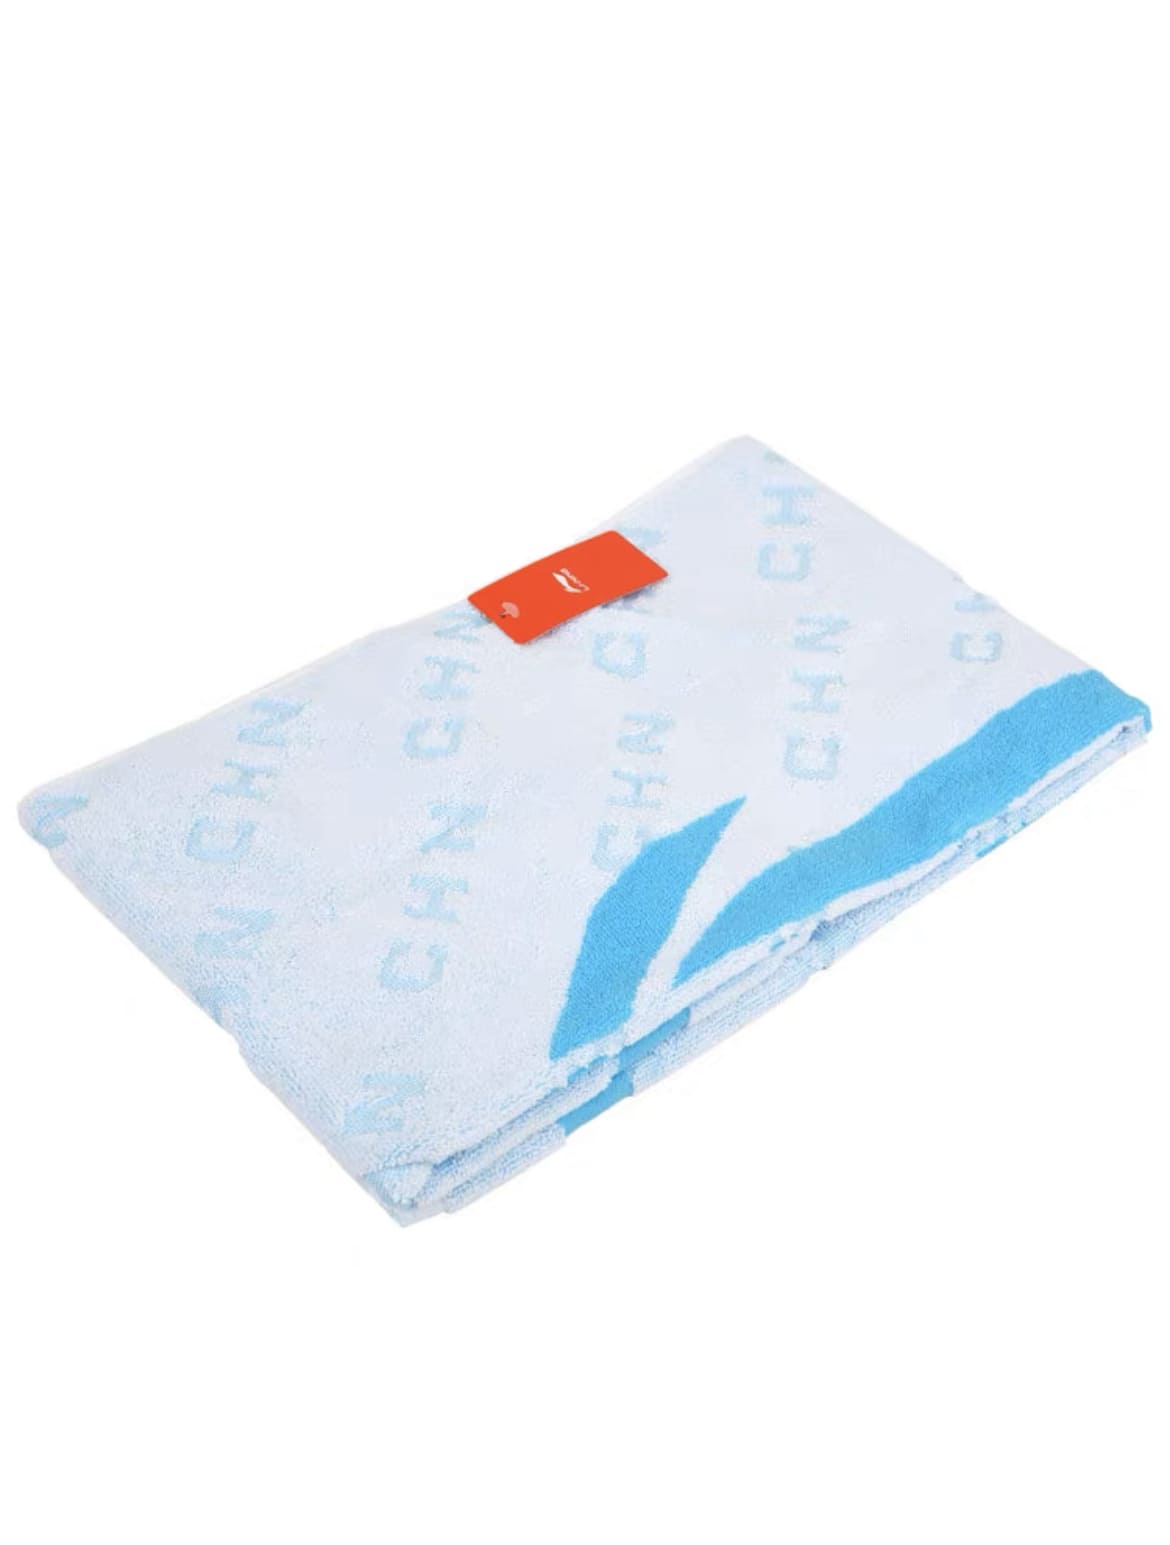 Li-Ning 100% Cotton Towel - Sky Blue / White color